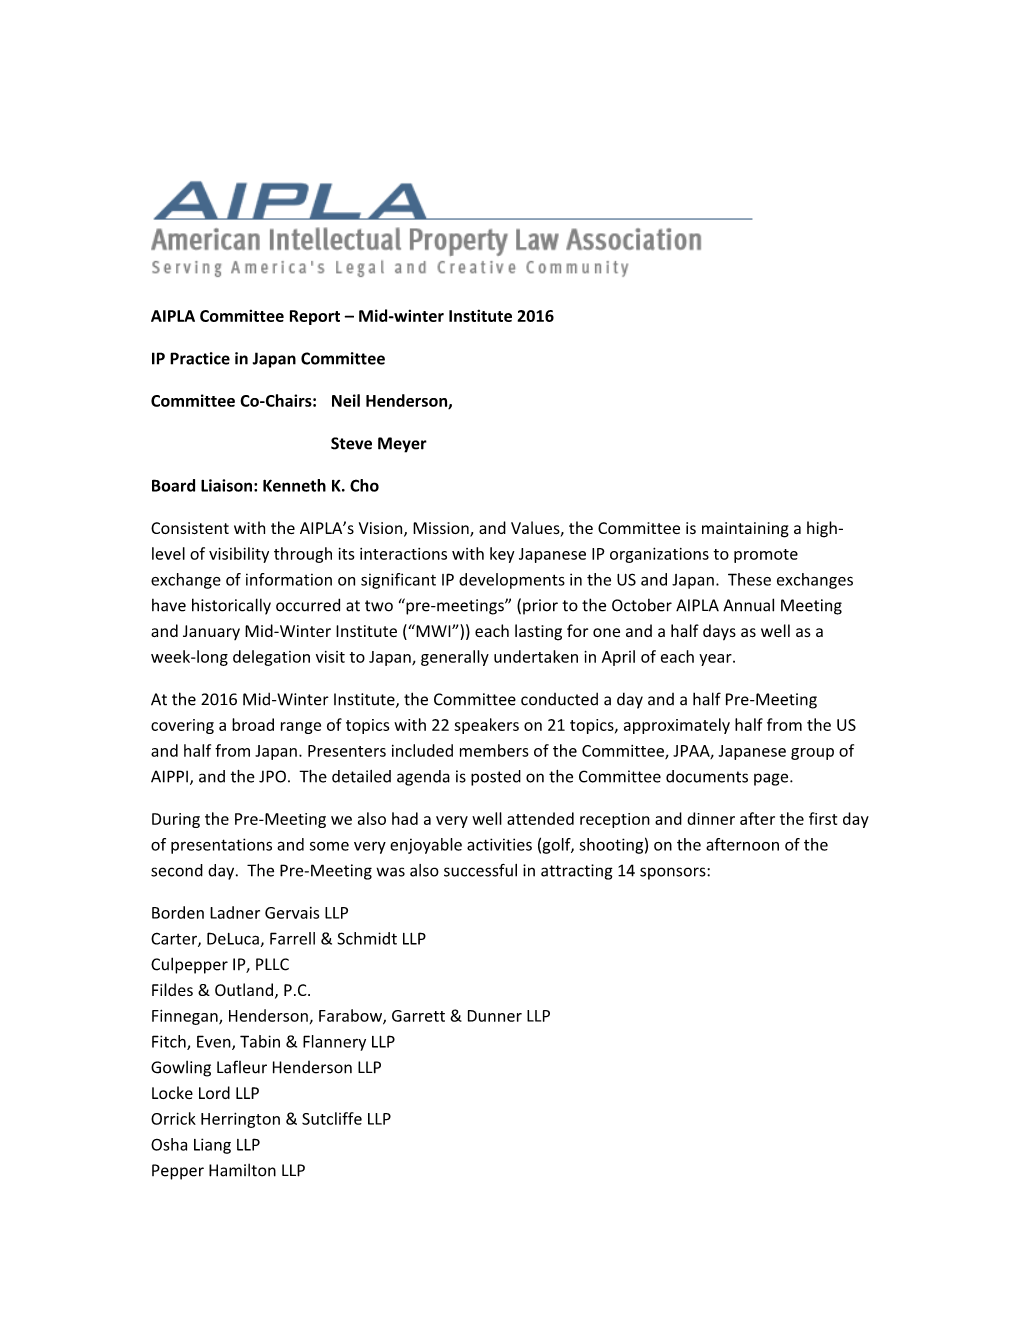 2016-01 - AIPLA - IP Practice in Japan Committee Report MWI 2016